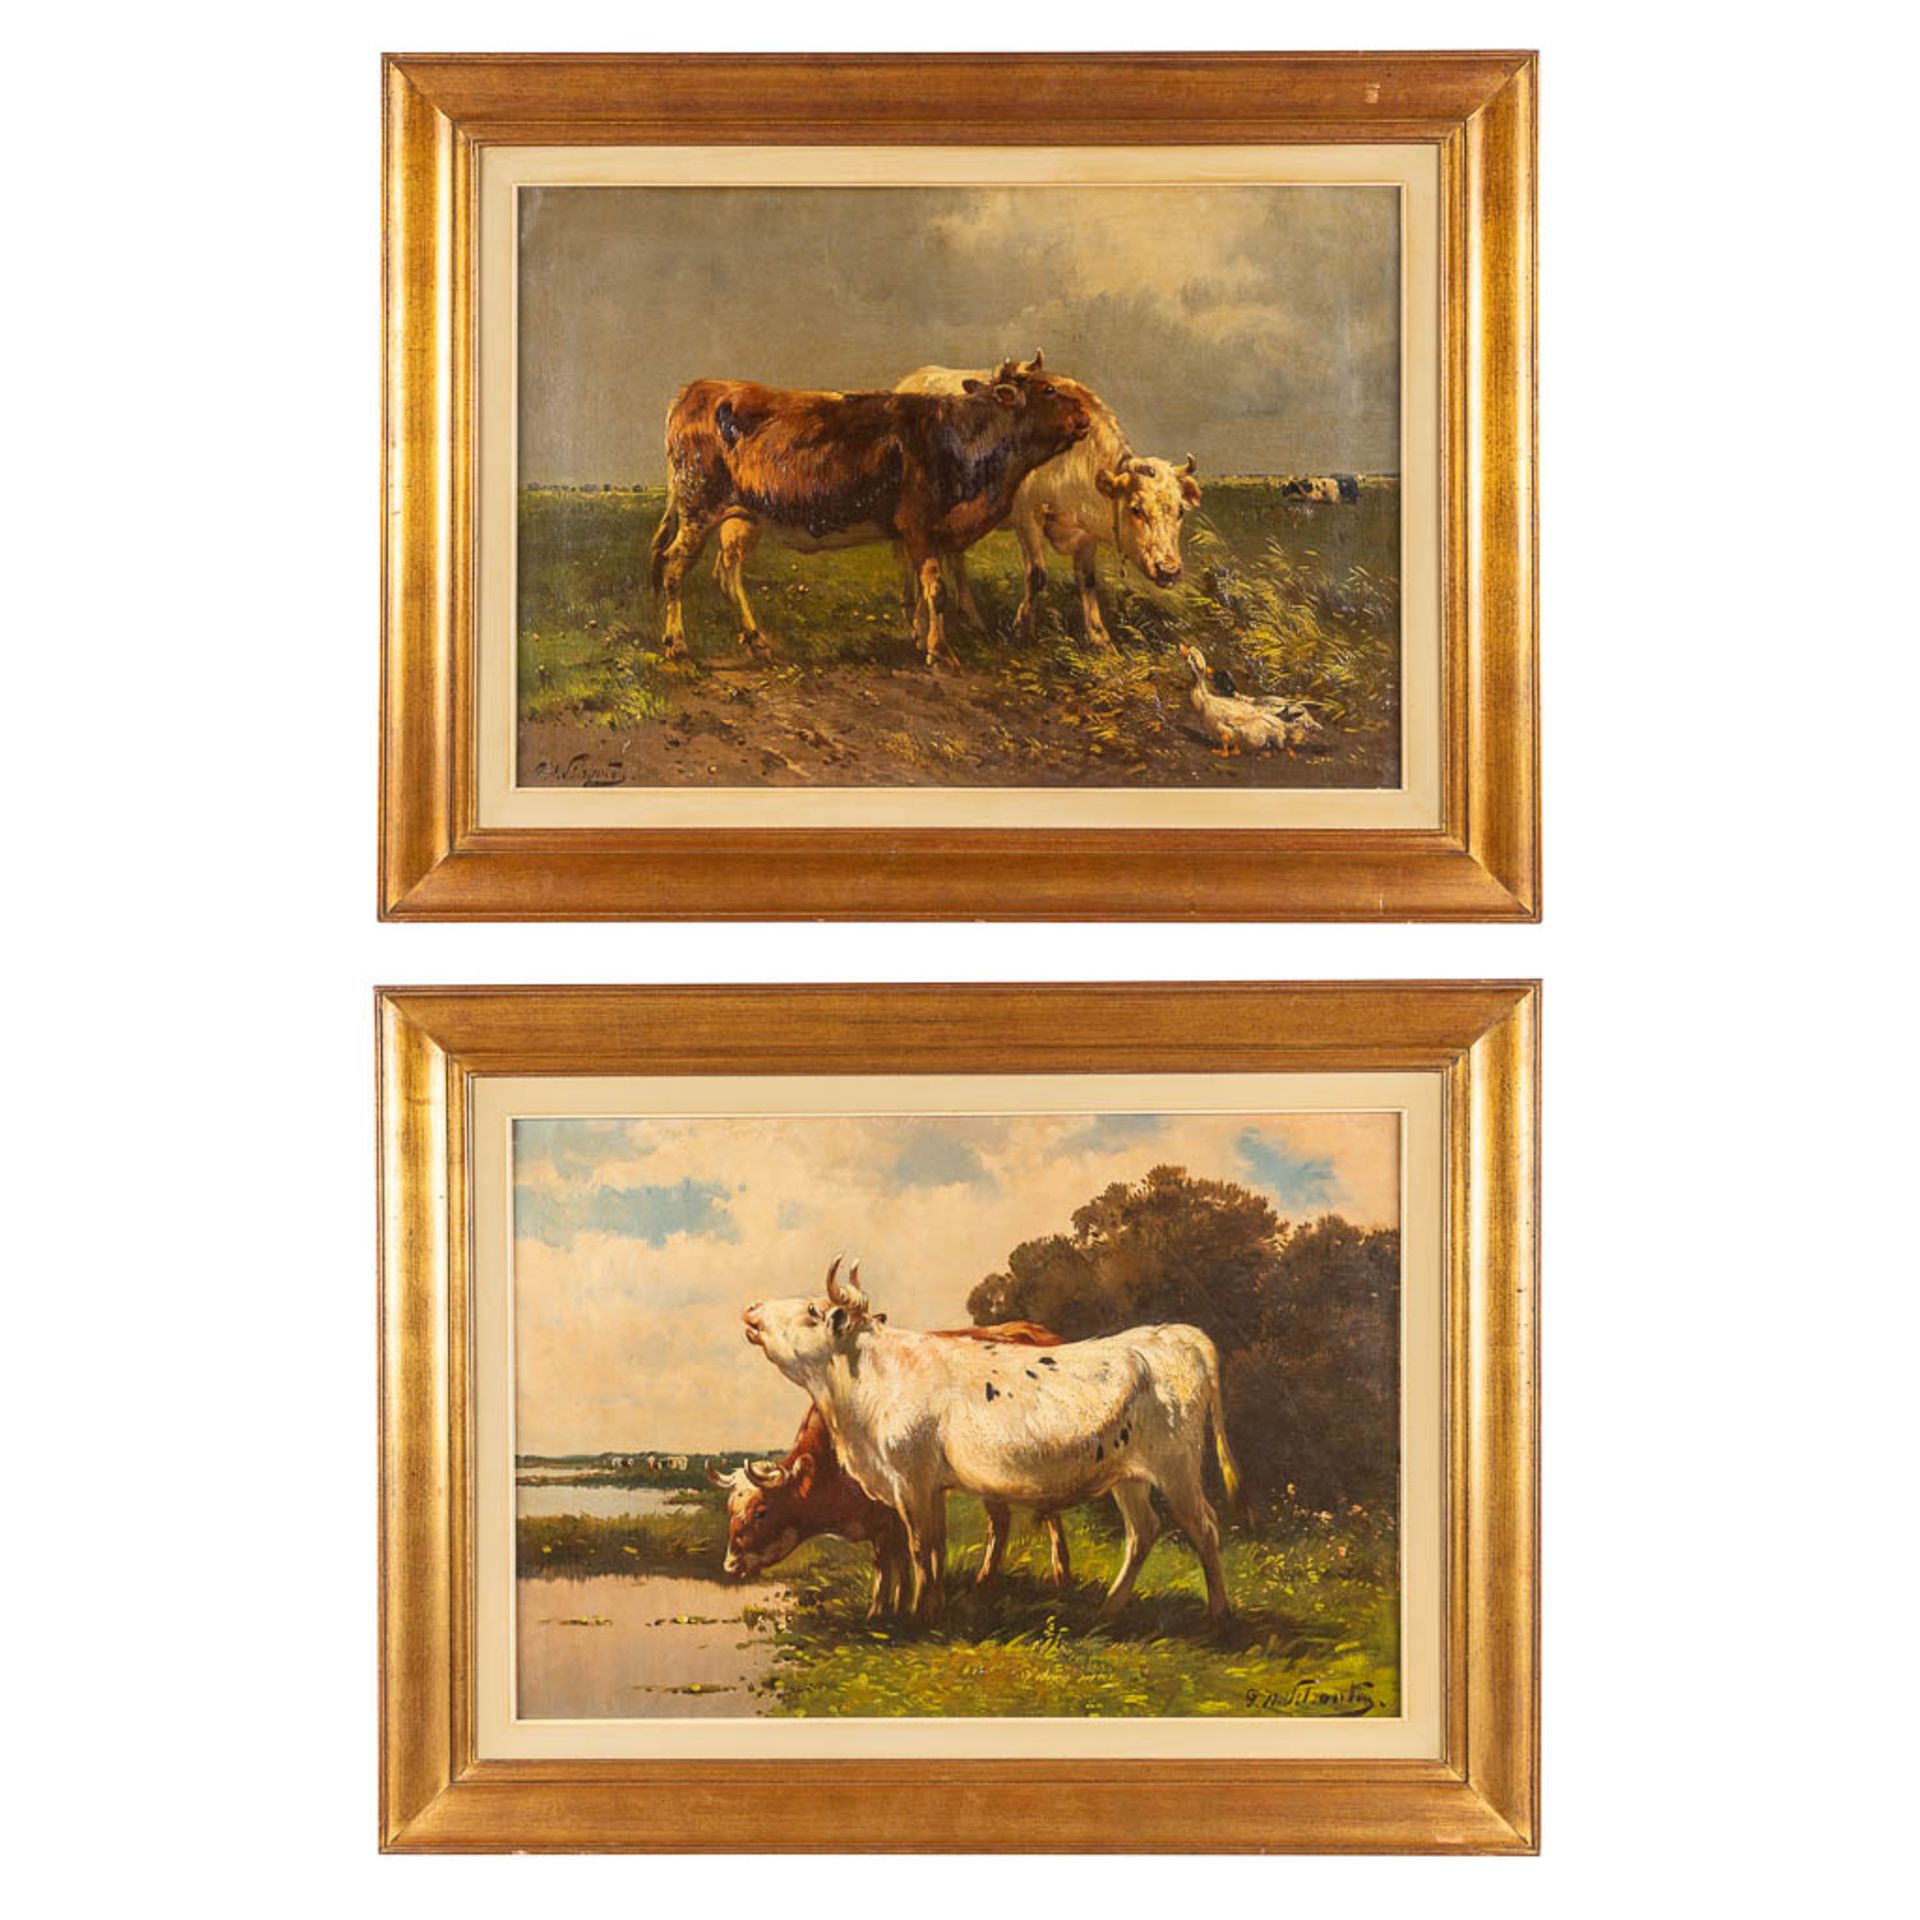 Henry SCHOUTEN (1857/64-1927) 'Pendant paintings, cows in a field' oil on canvas. (W: 80 x H: 55 cm)